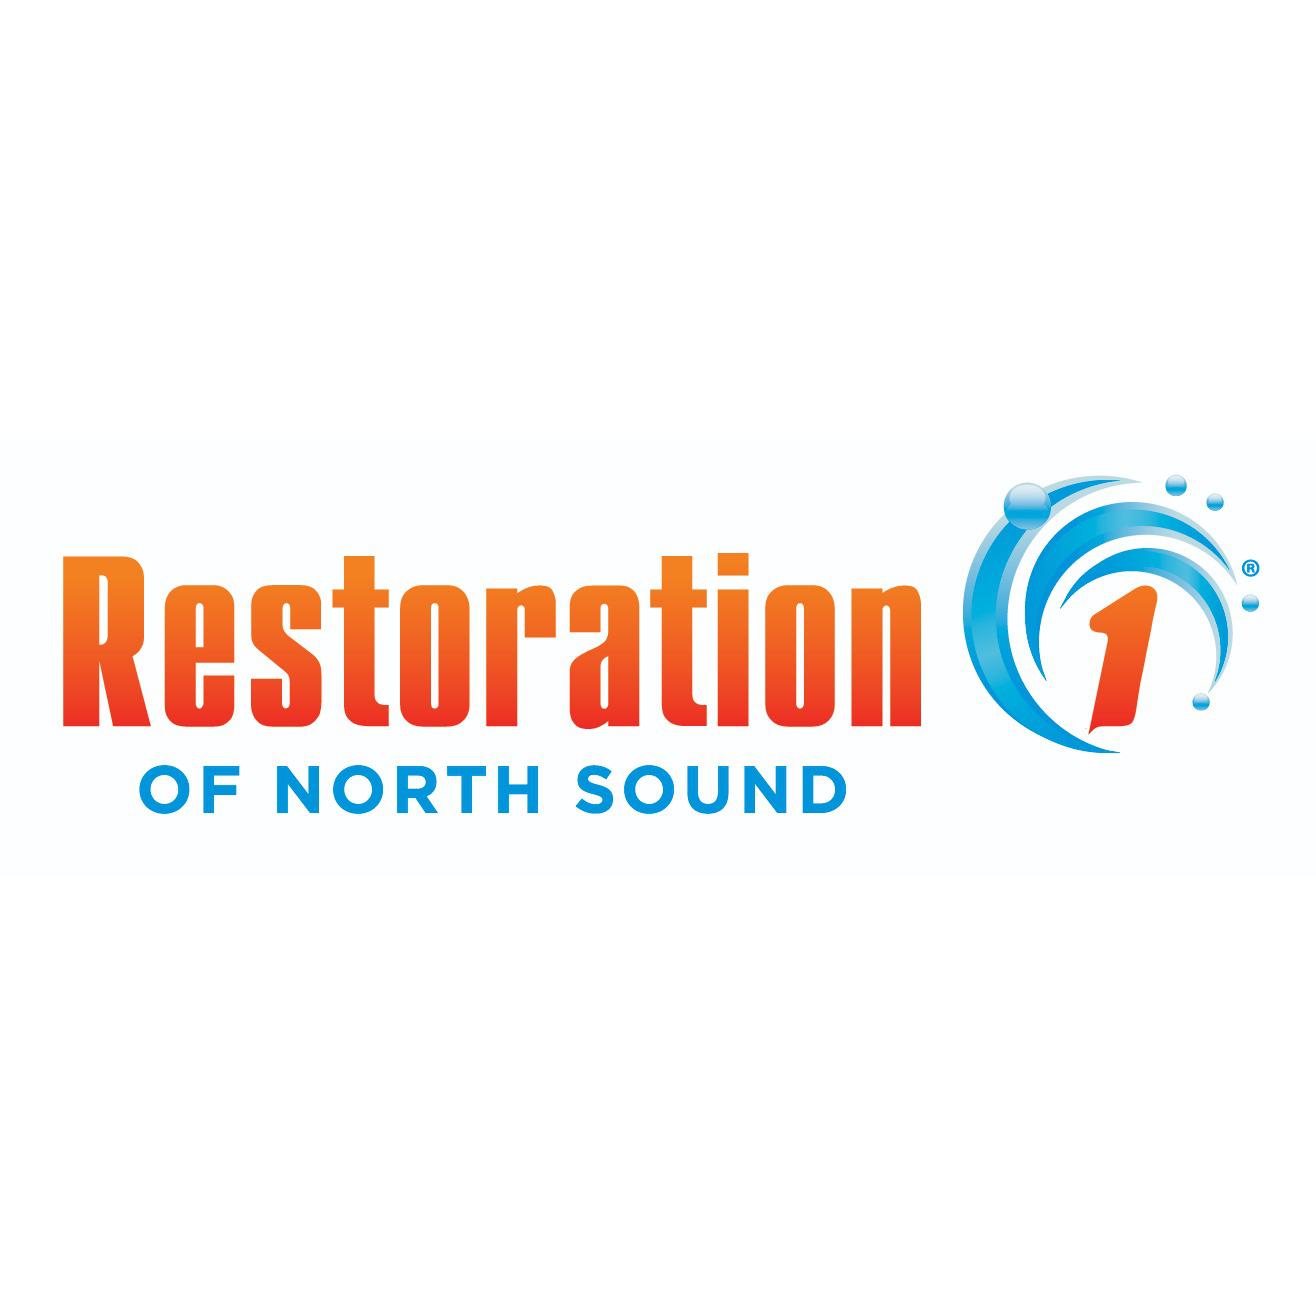 Restoration 1 of North Sound